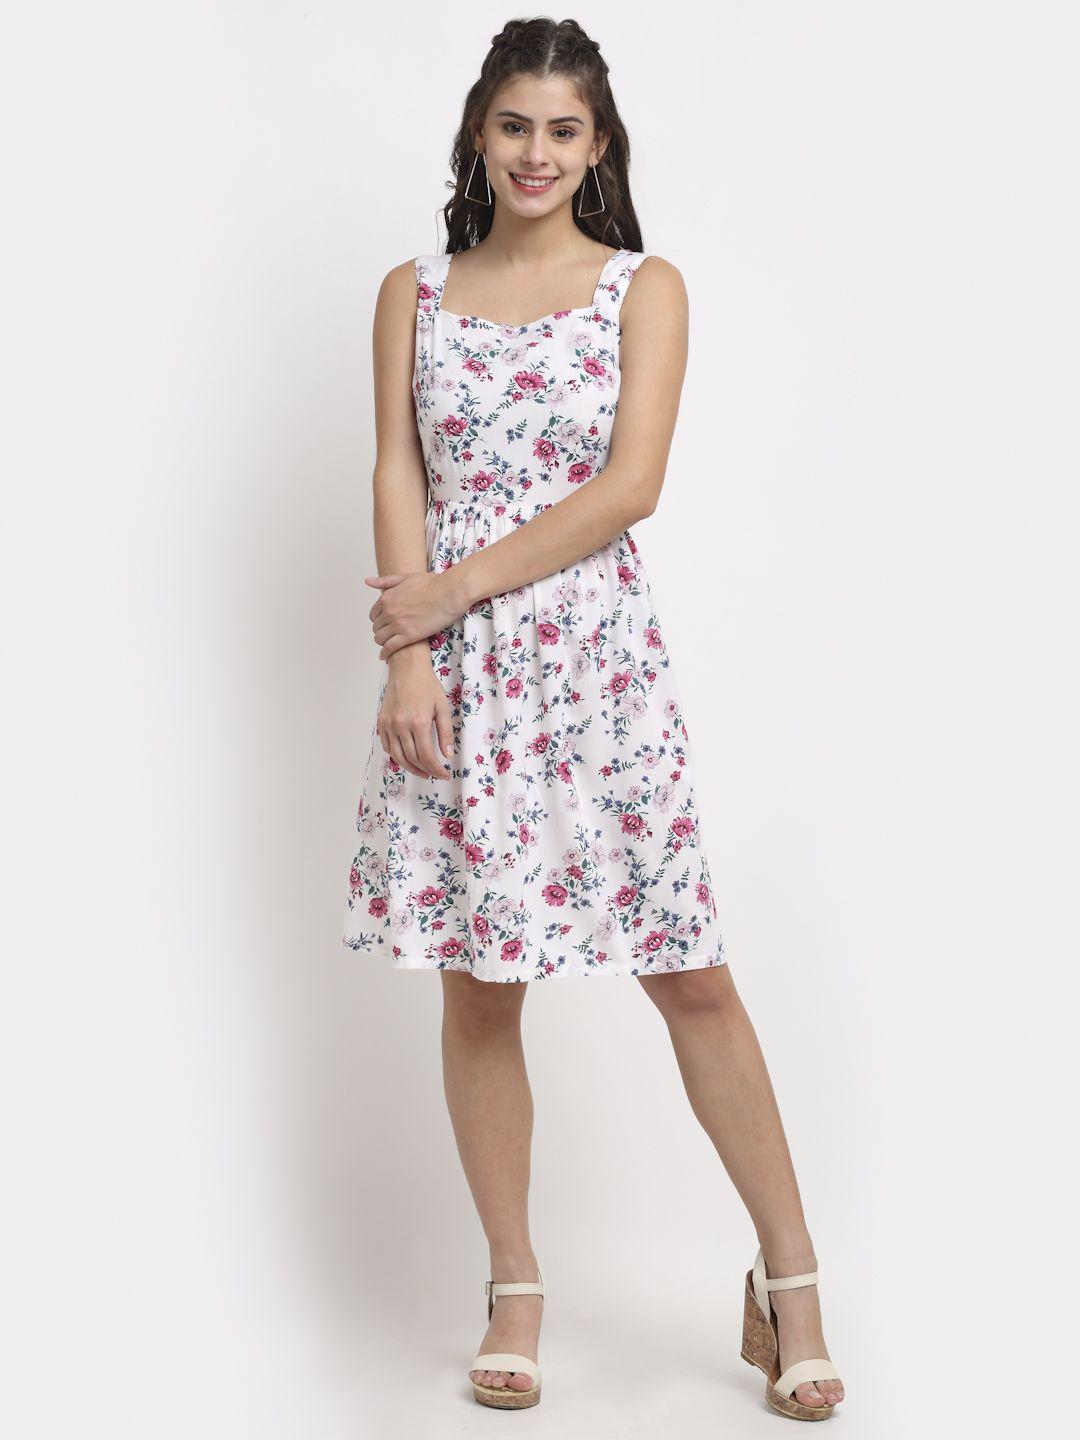 brinns white & pink floral print sleeveless dress